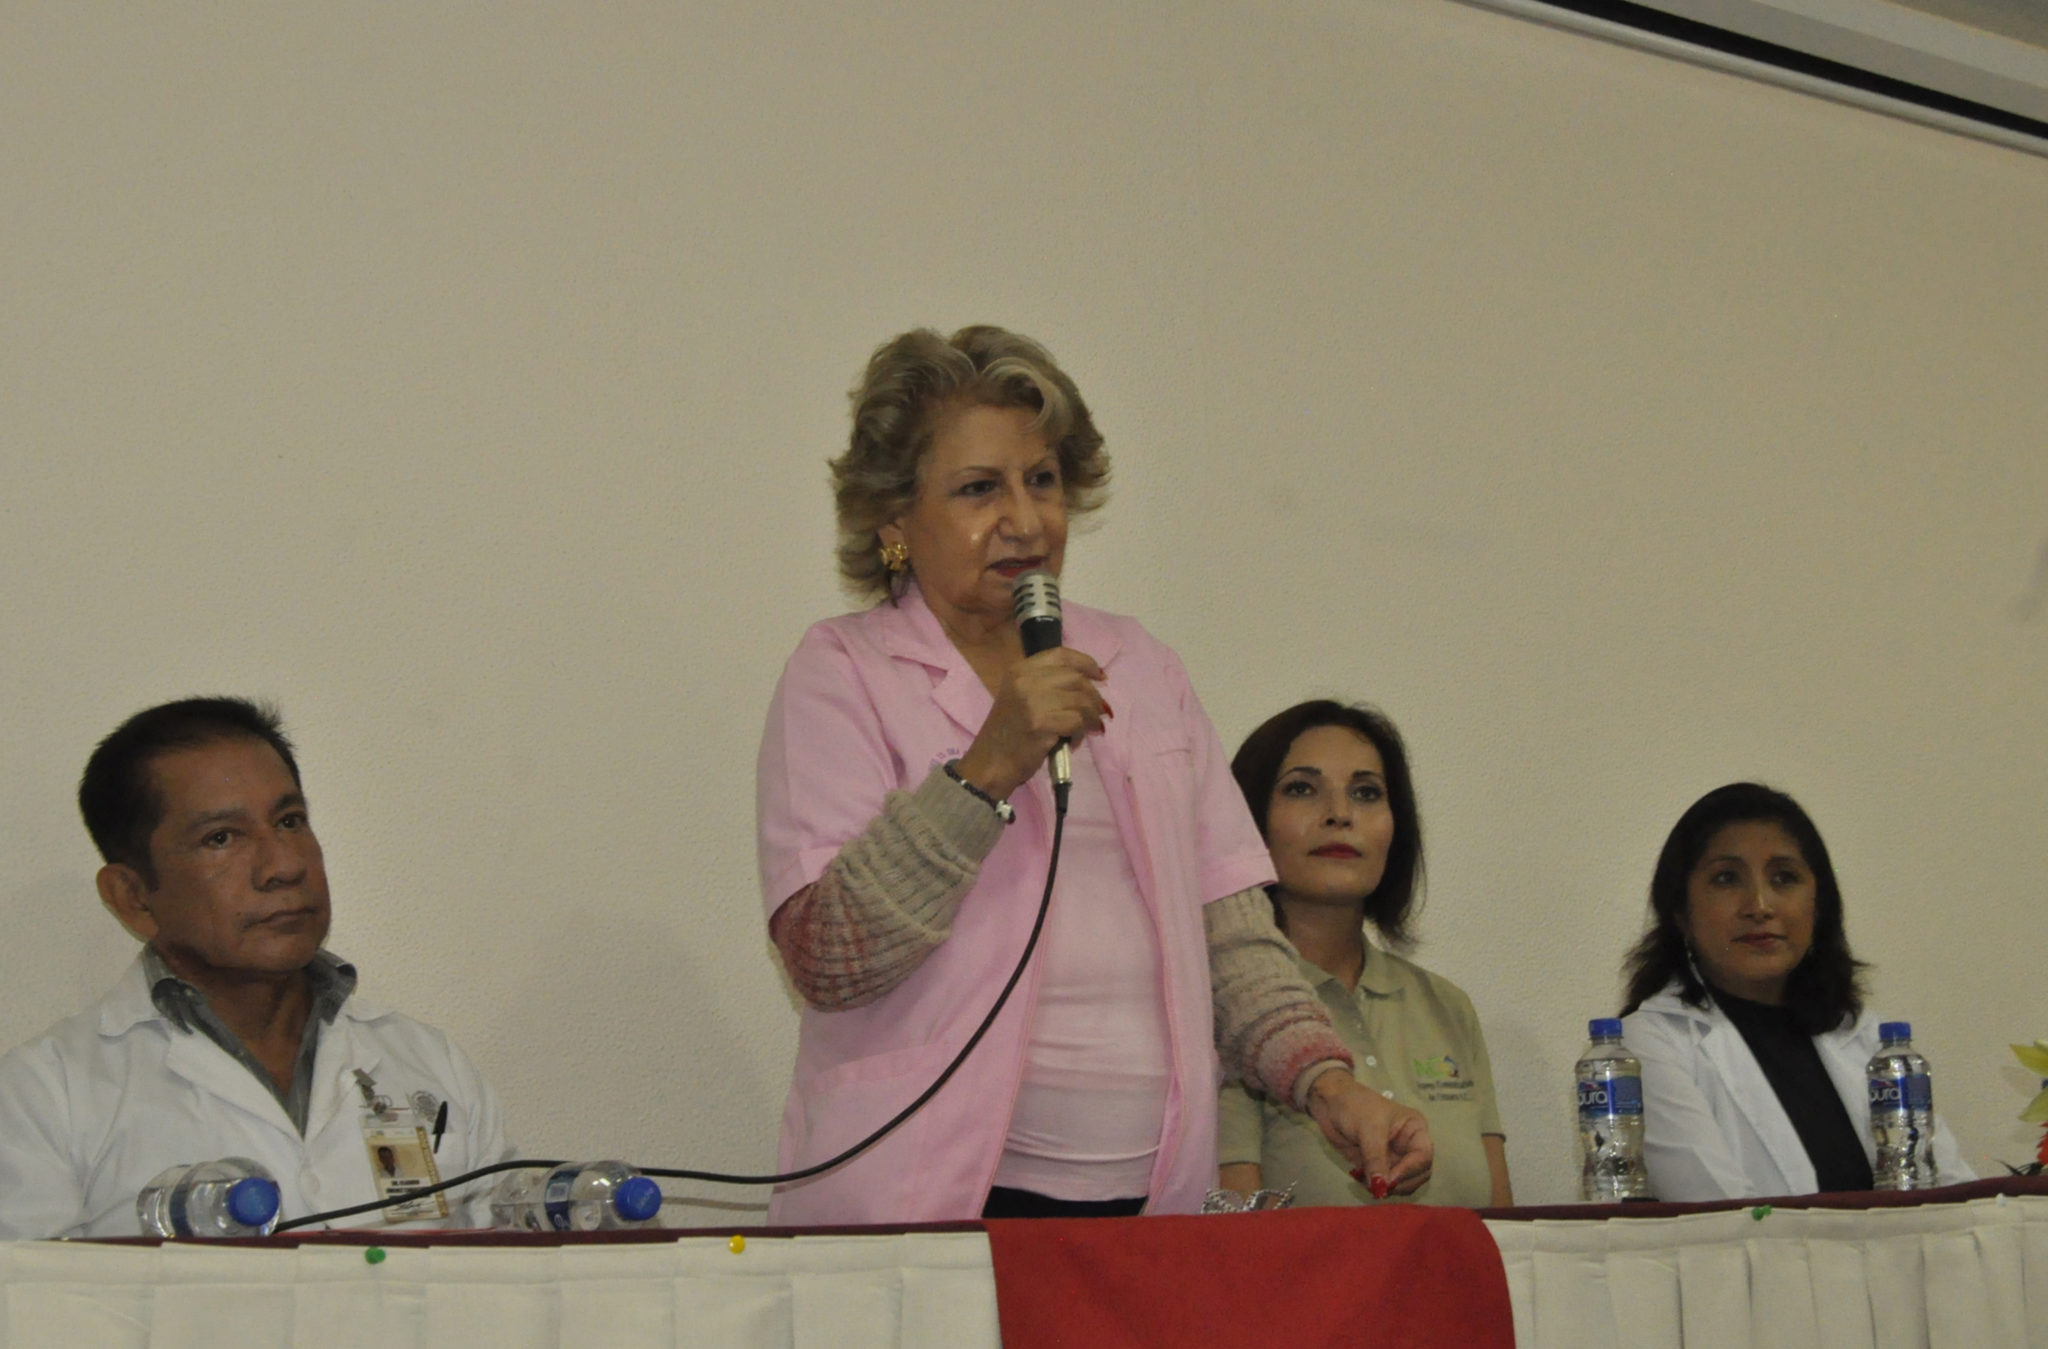 Jornada de mastografías beneficia a 447 mujeres en Oaxaca